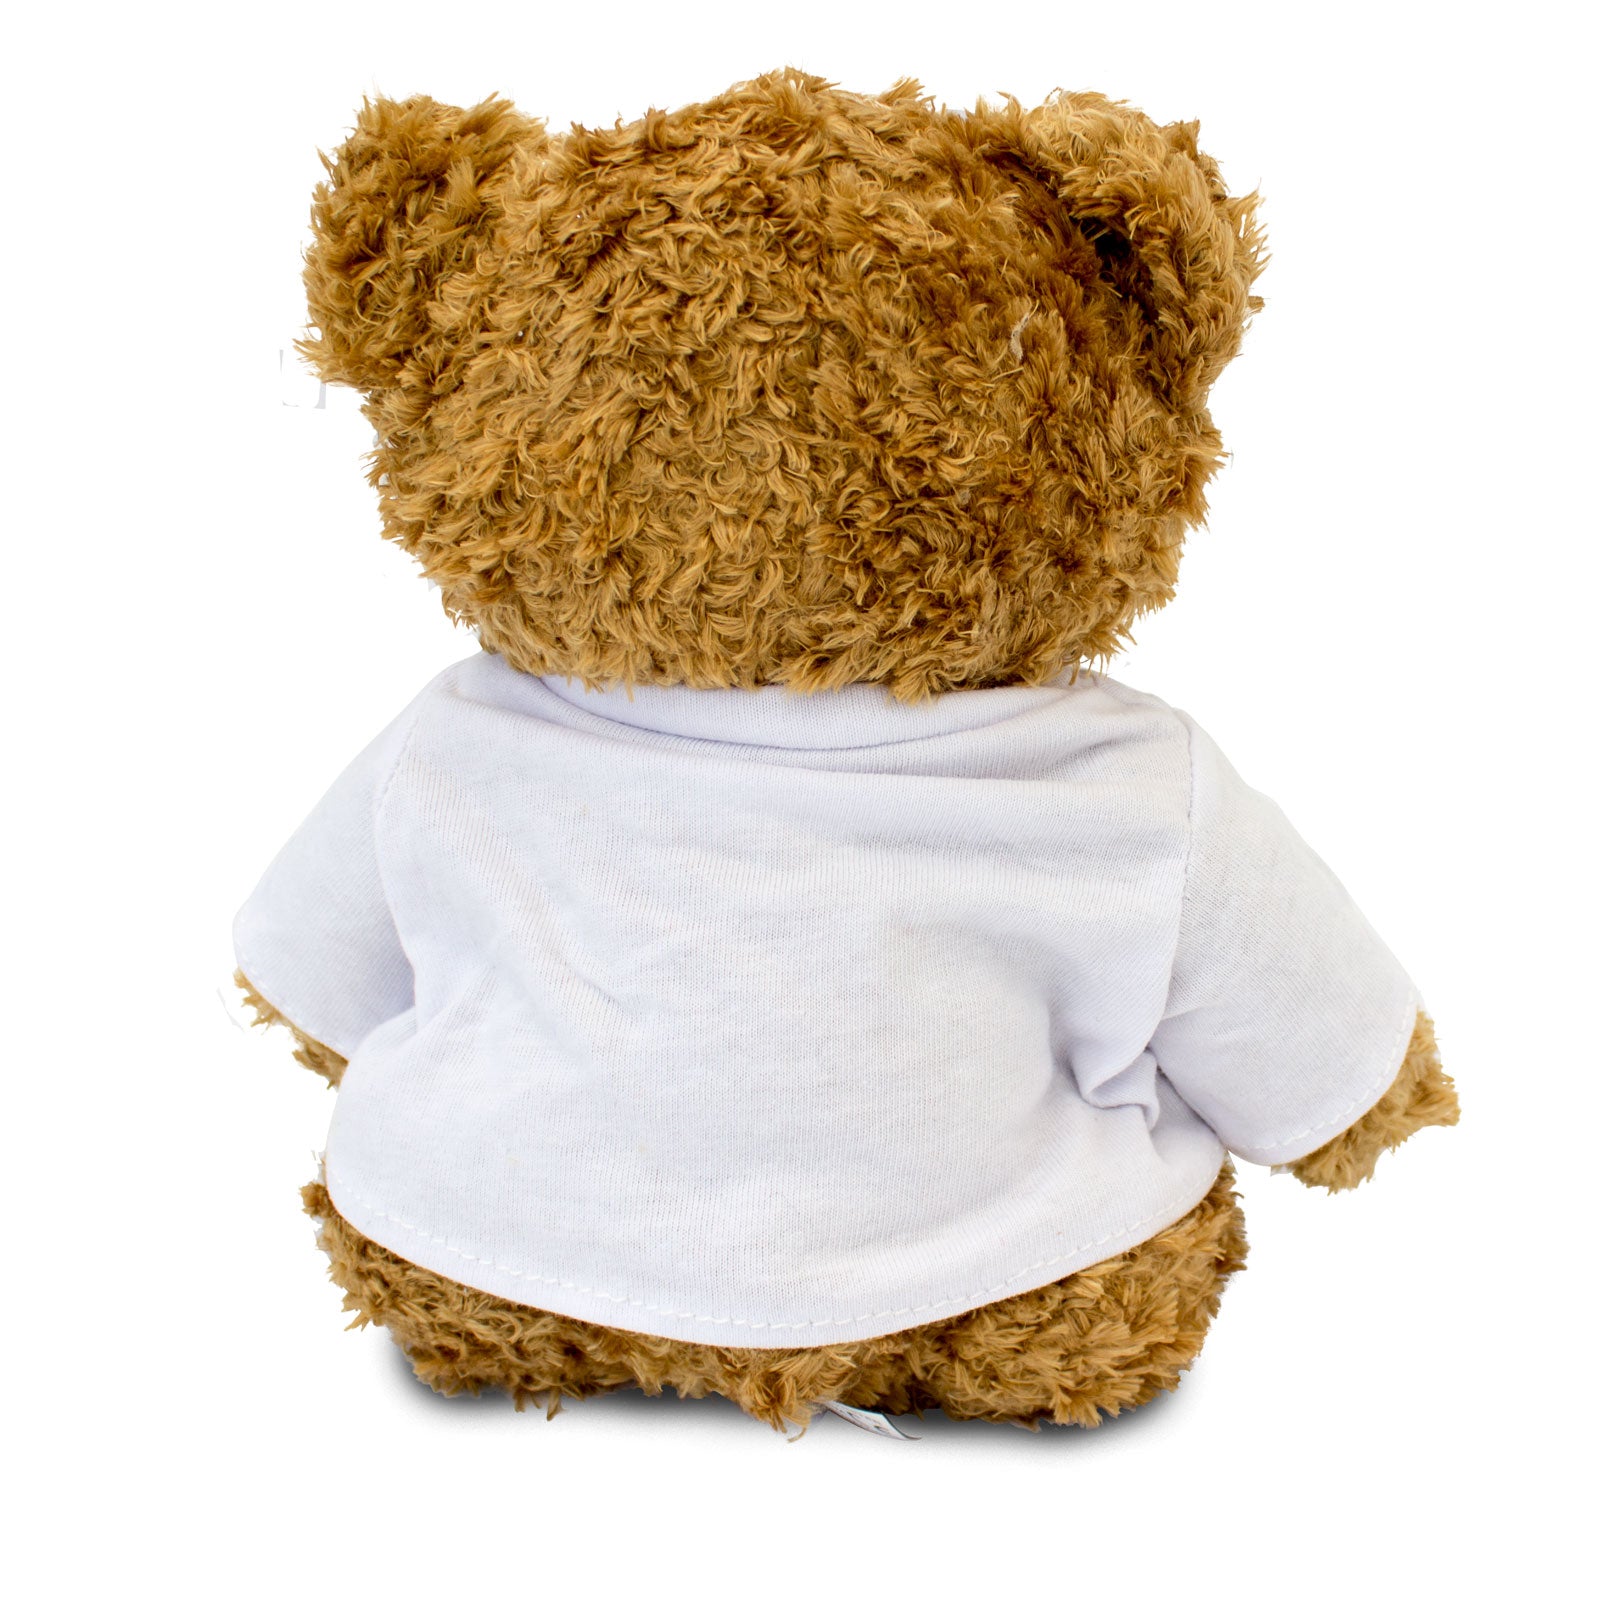 I Love My Belgian Malinois - Teddy Bear